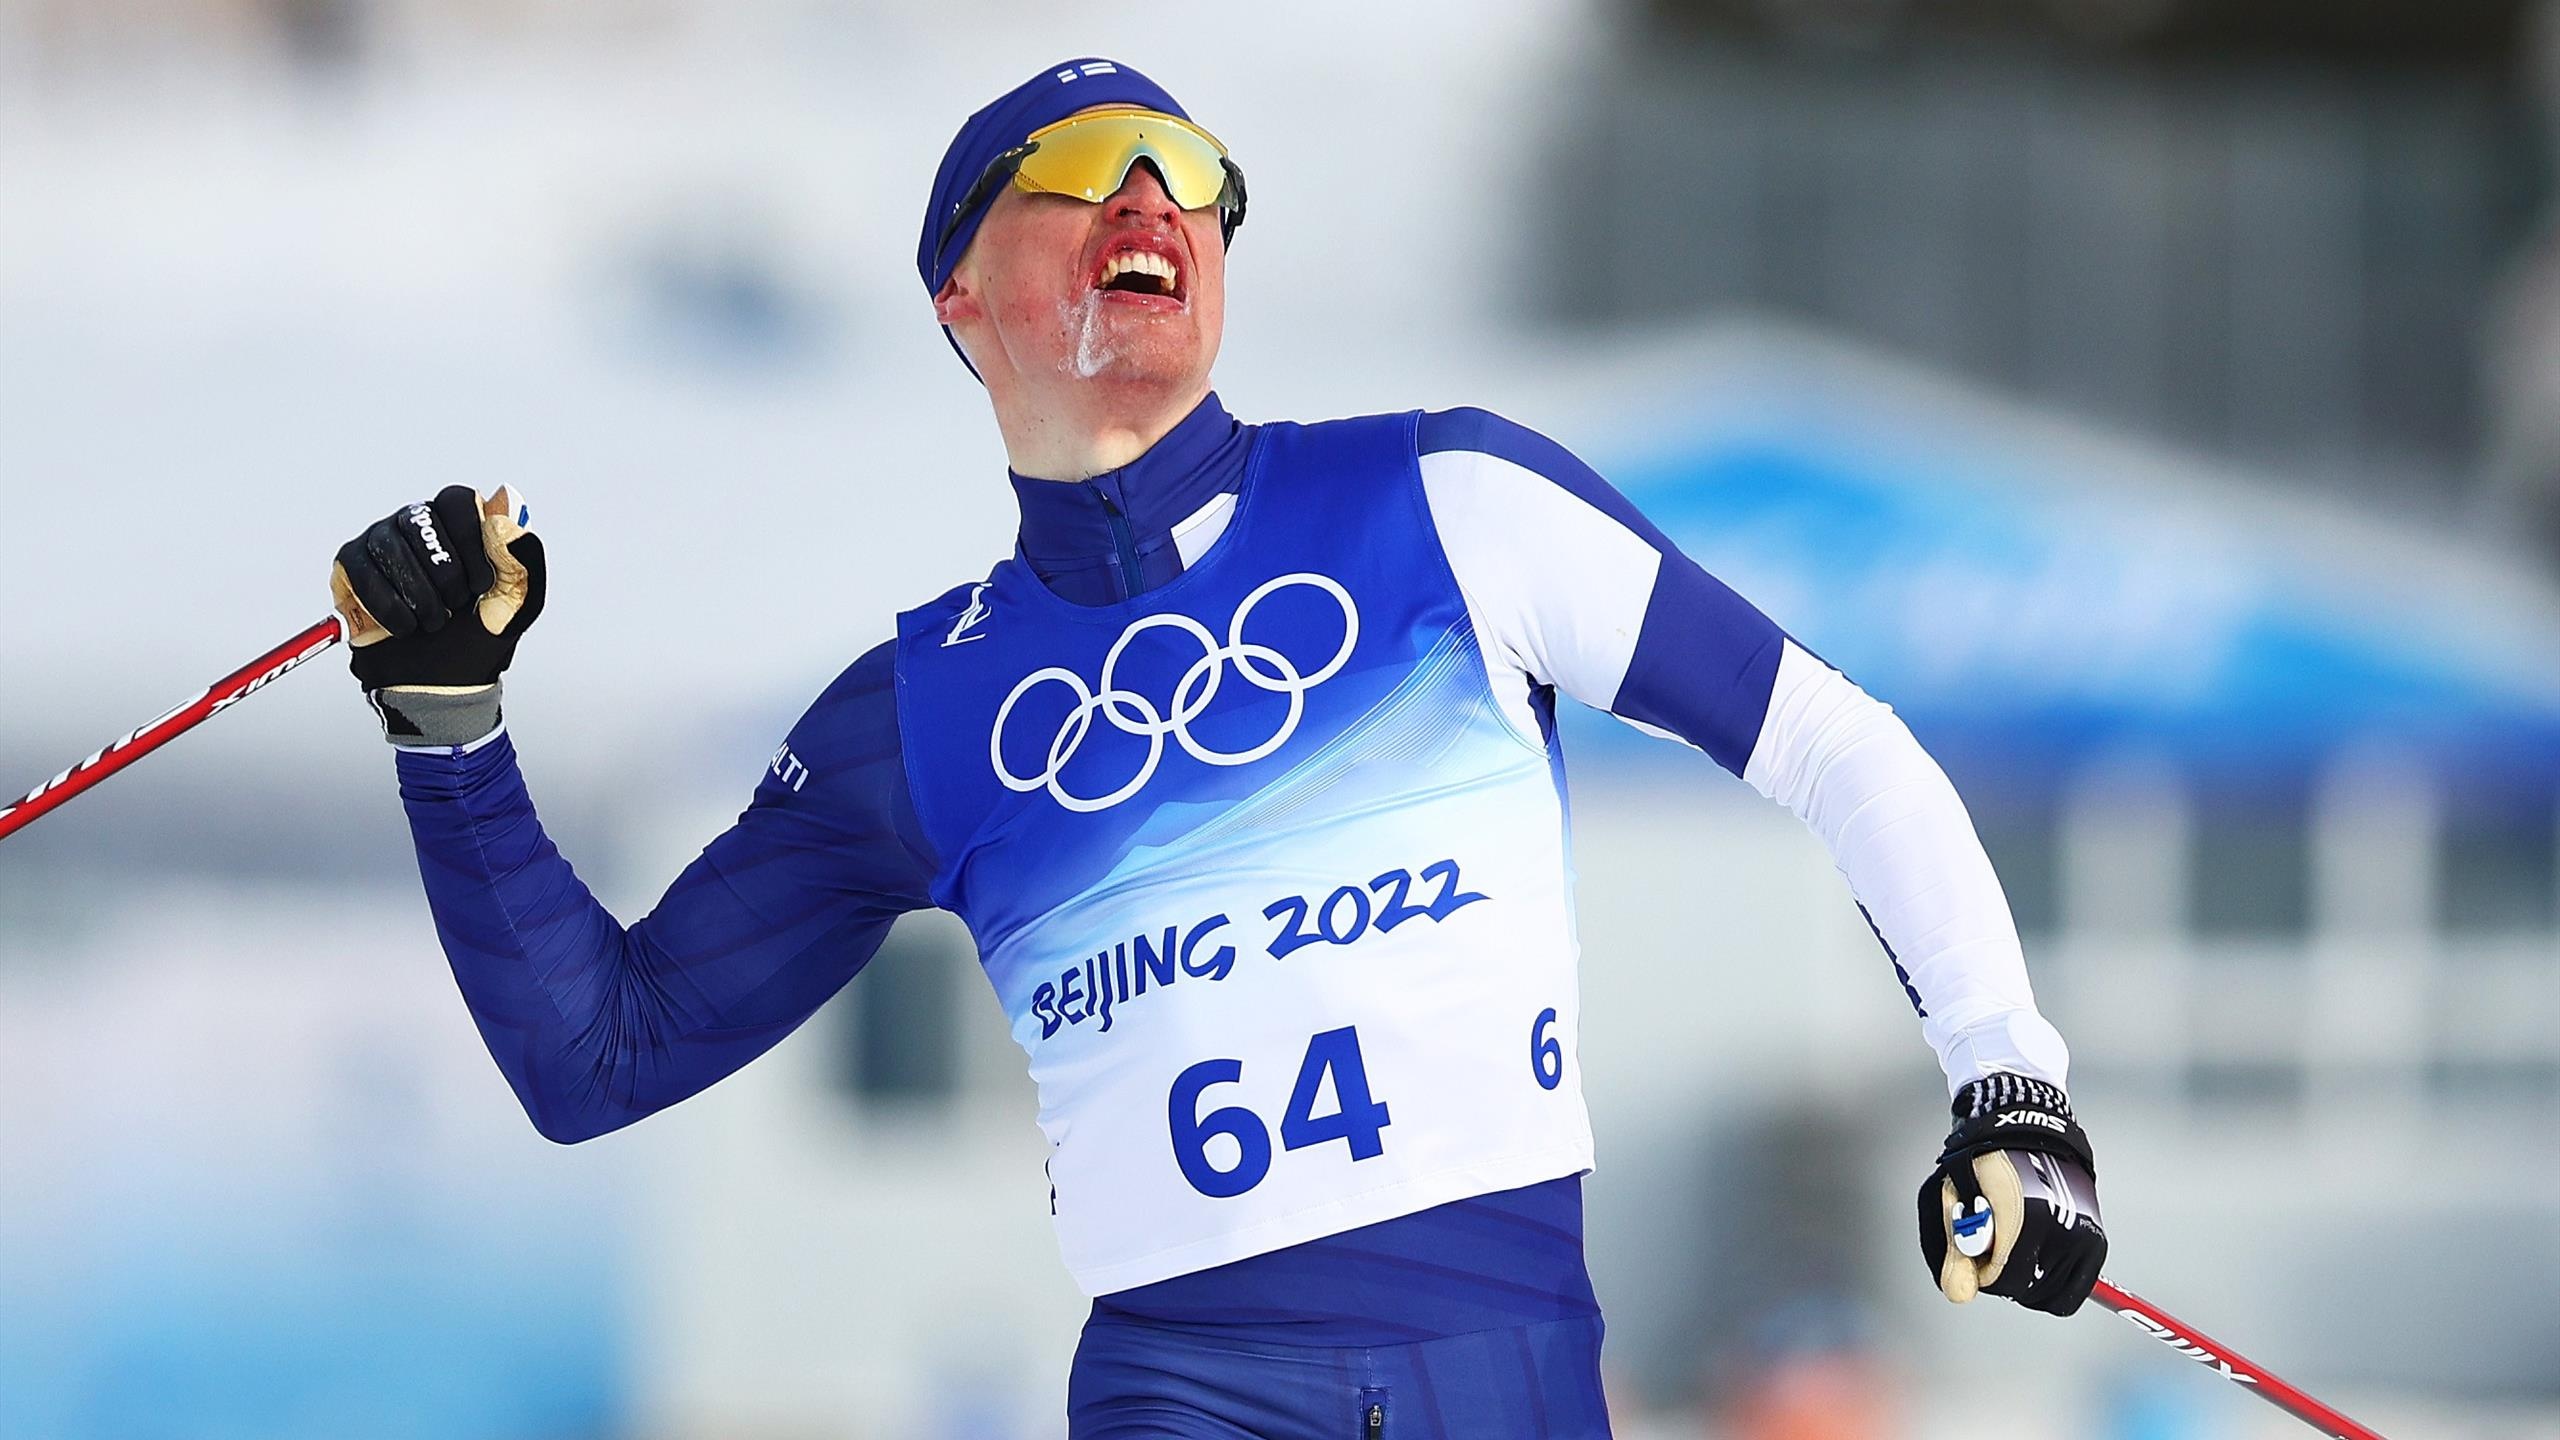 Iivo Niskanen, Winter Olympics champion, Exciting race, Eurosport coverage, 2560x1440 HD Desktop